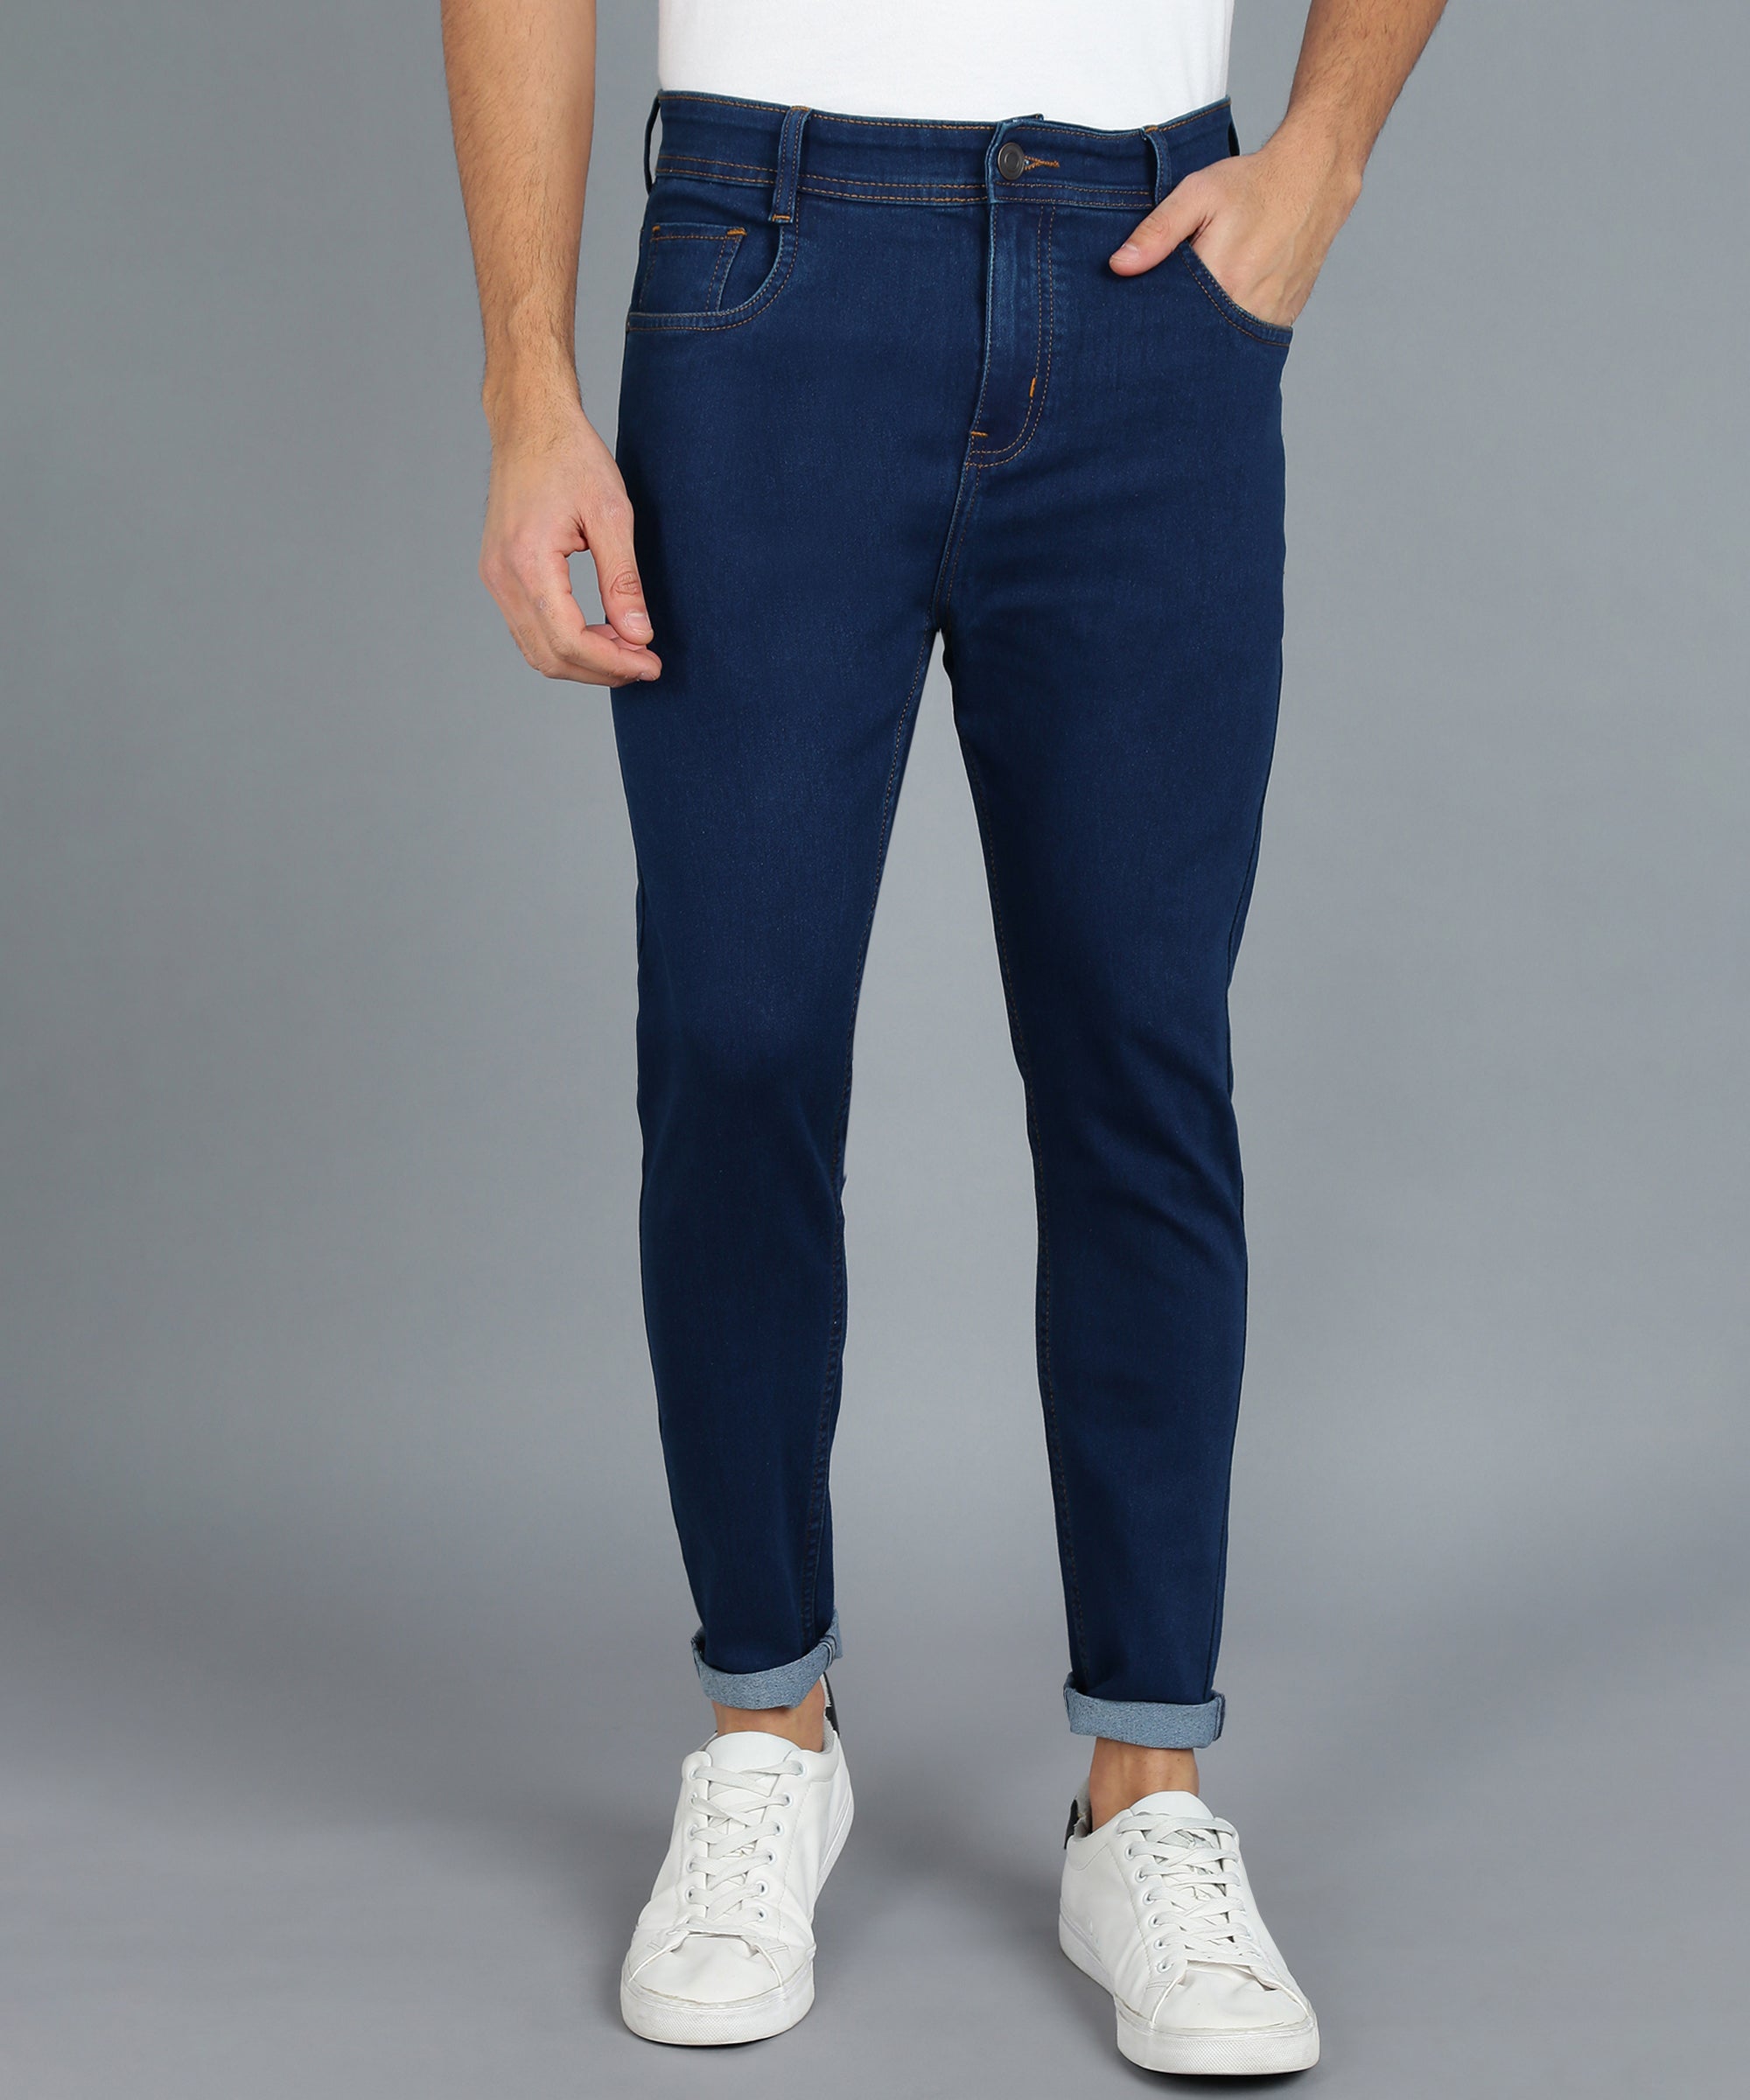 Men's Navy Blue Slim Fit Jeans Stretchable